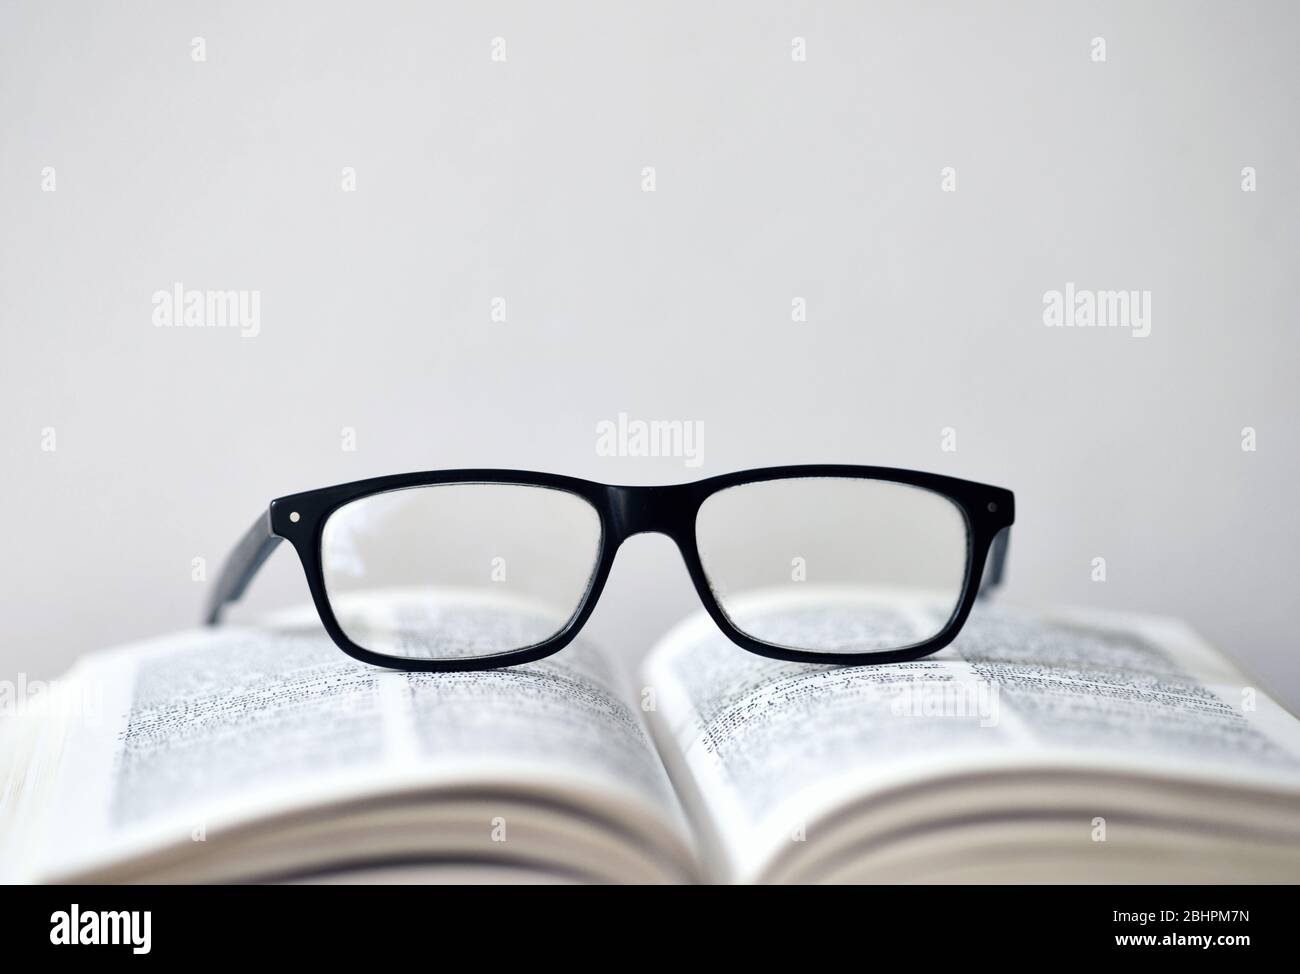 Eyeglasses on a translation book Stock Photo